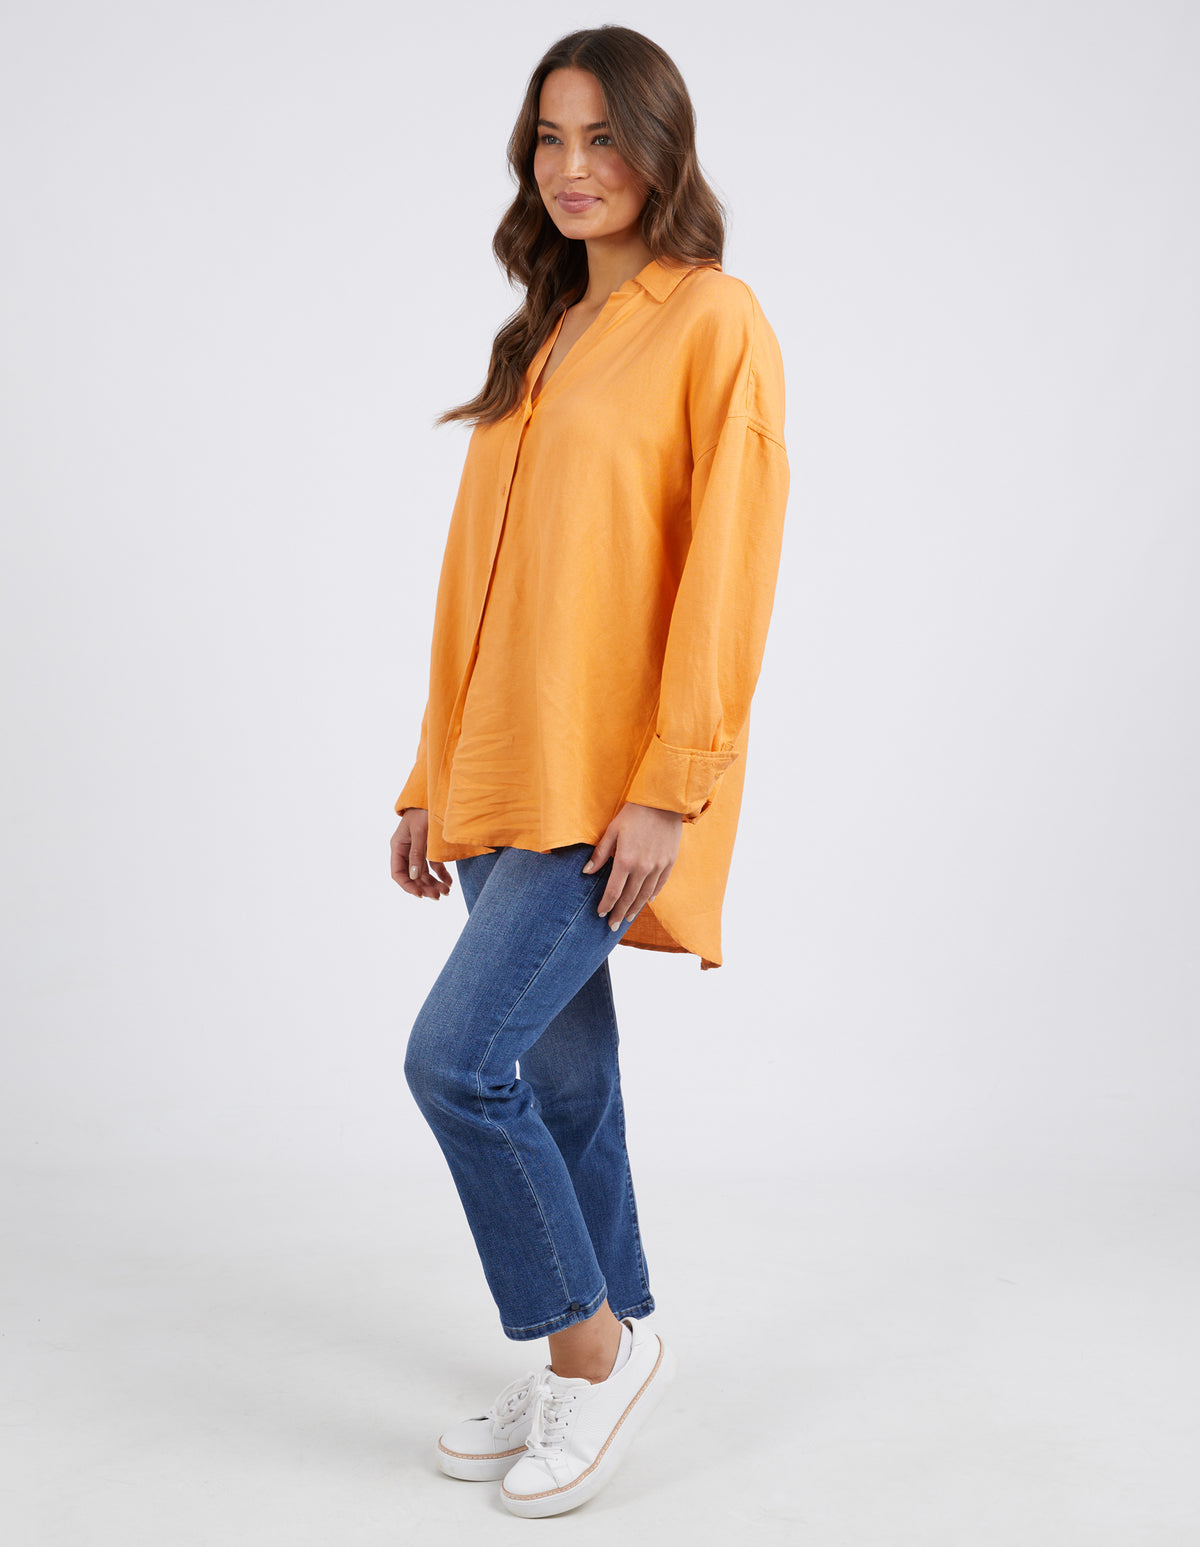 Elm - Cordelia Linen Shirt - Orange